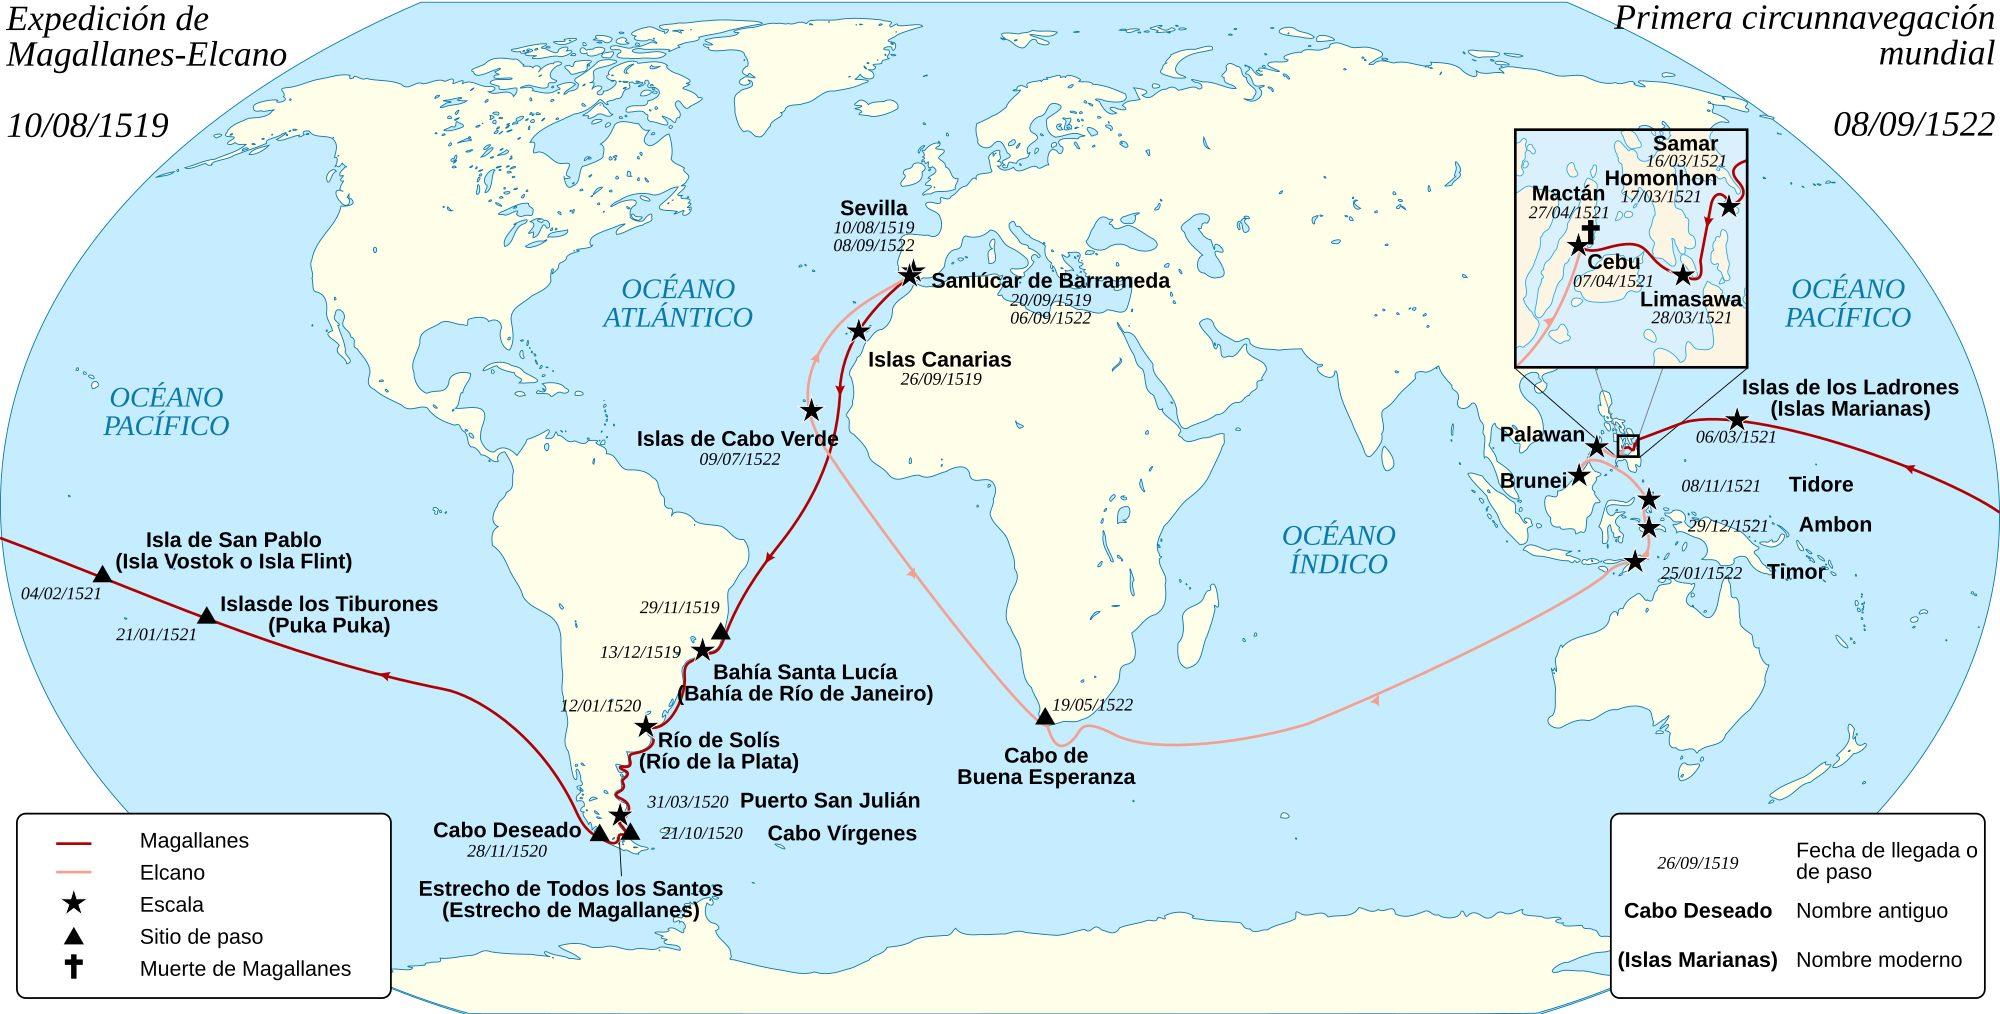 Ruta de la Expedición de Magallanes-Elcano. https://es.wikipedia.org